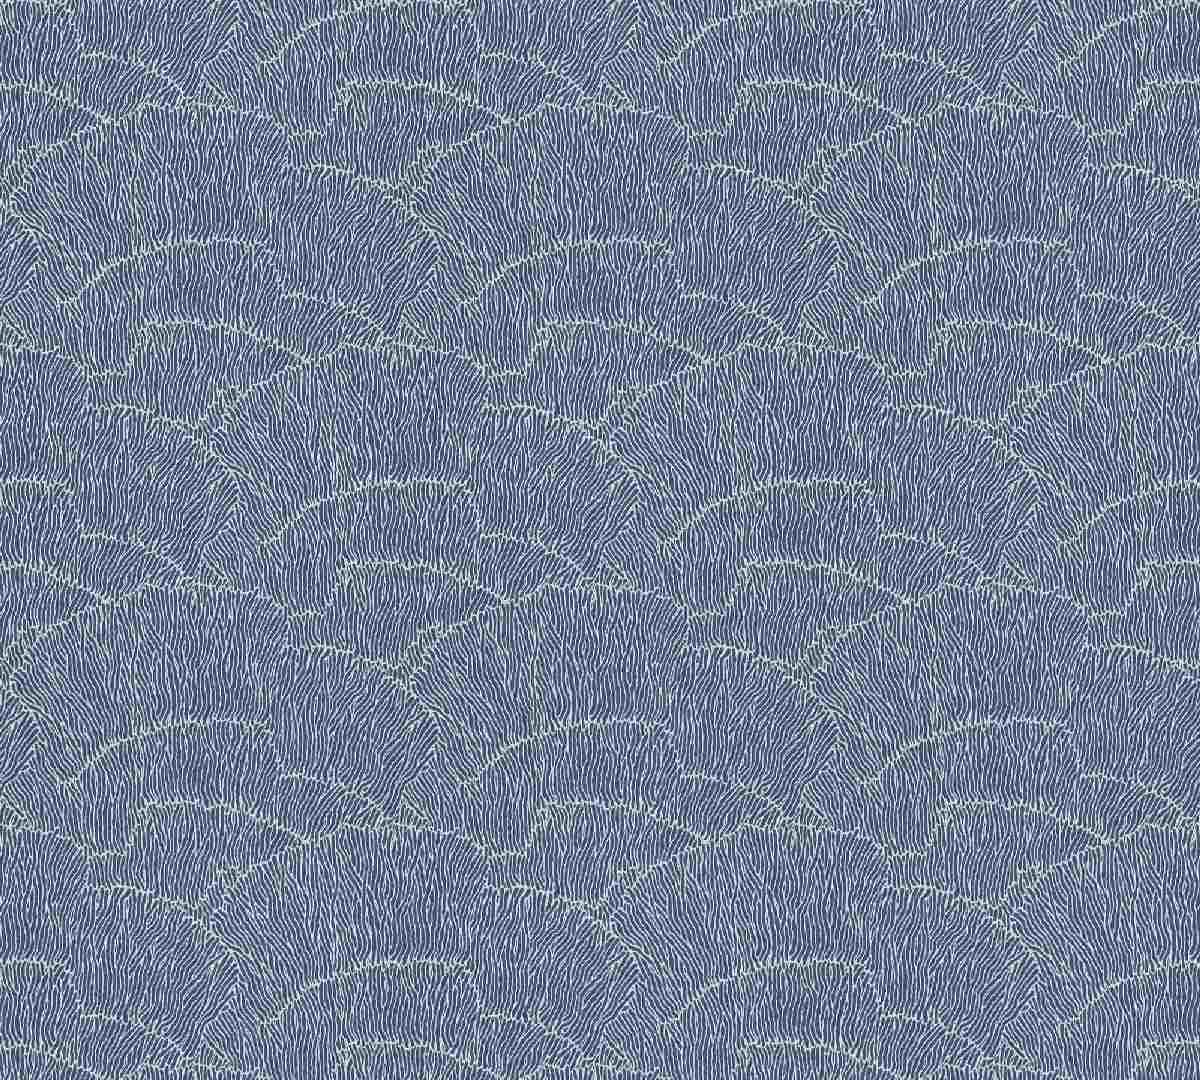 Vliestapete AP Arcade 391746 - Strukturtapete Muster - Silber, Blau